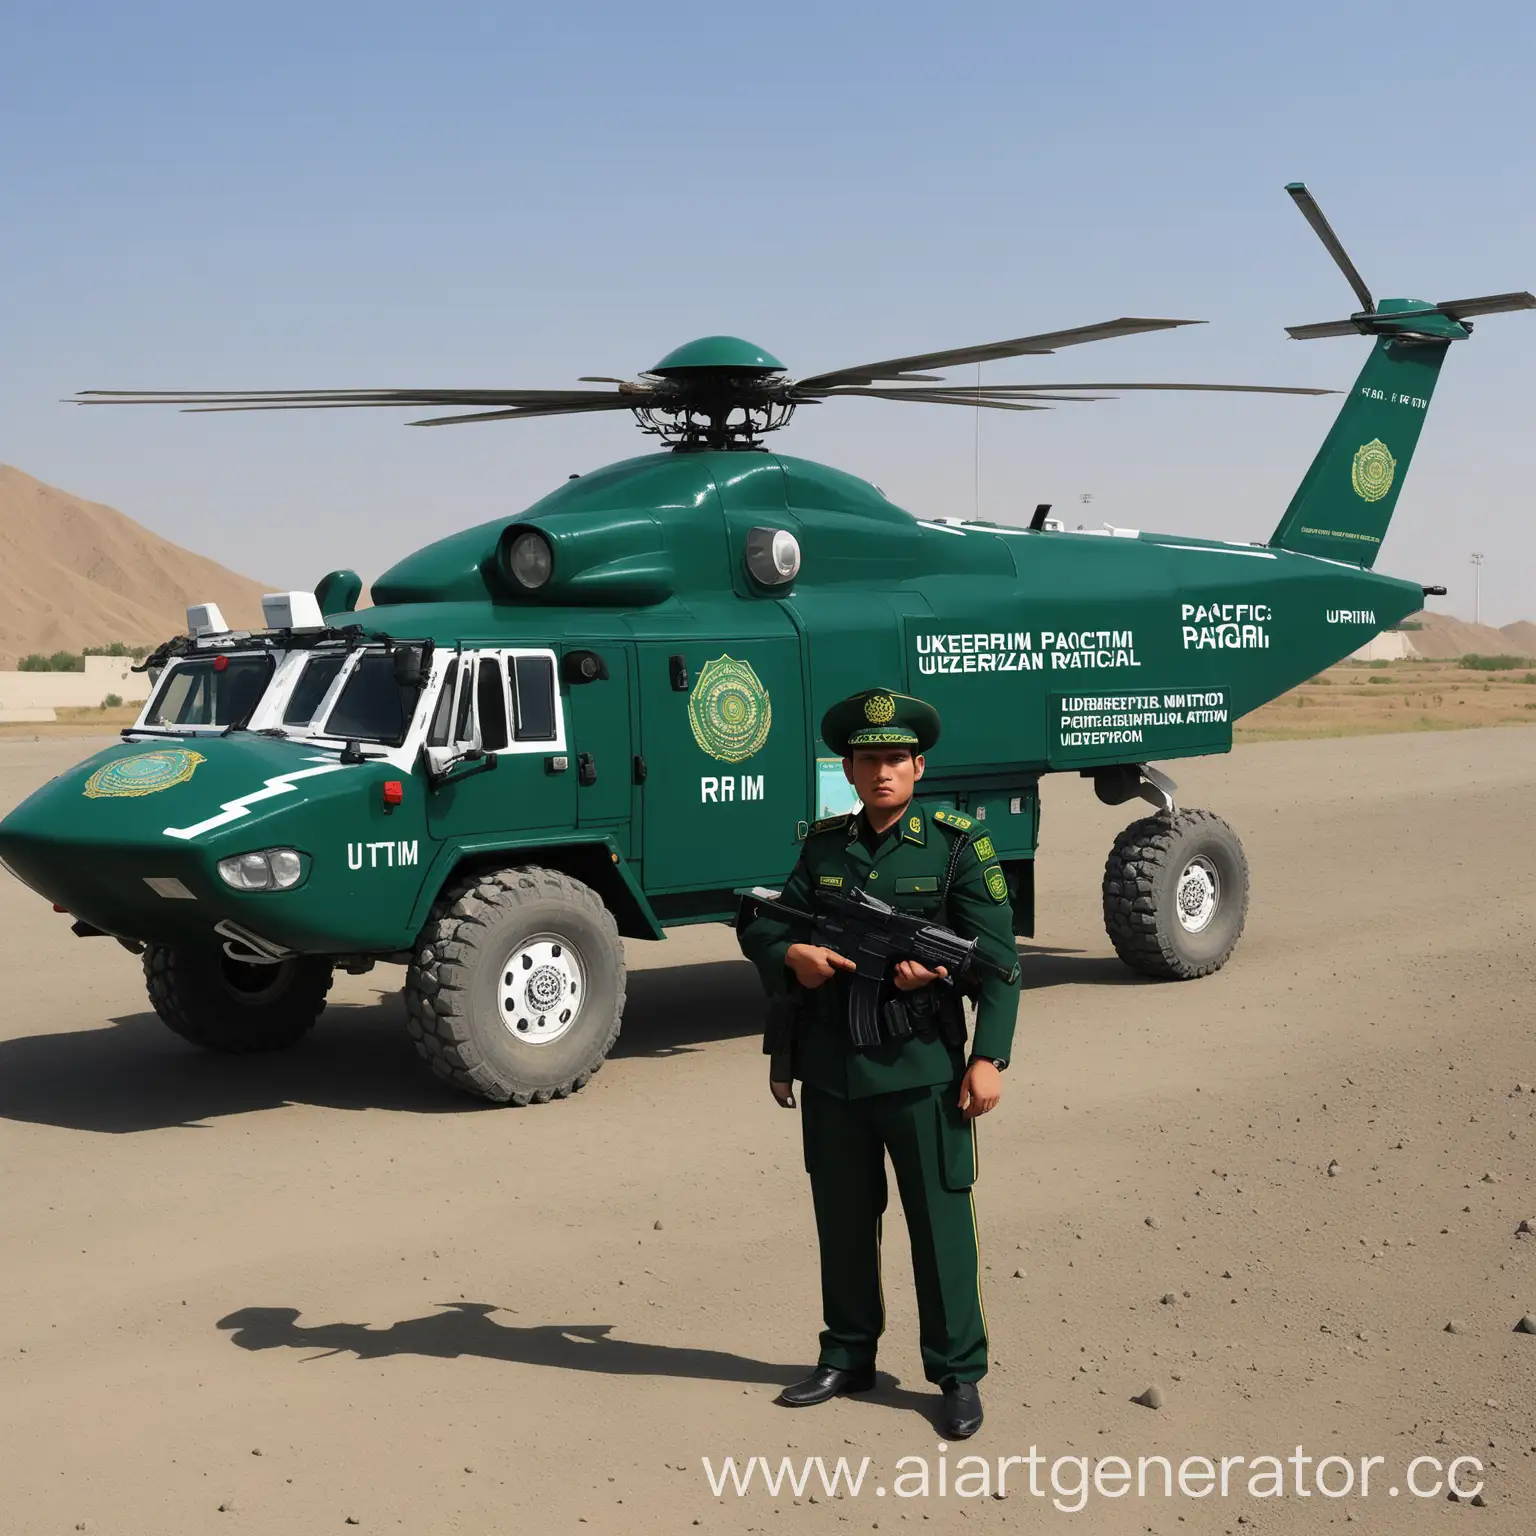 Uzbekistan-Pacific-Rim-Border-Patrol-Vigilance-along-Diverse-Terrains